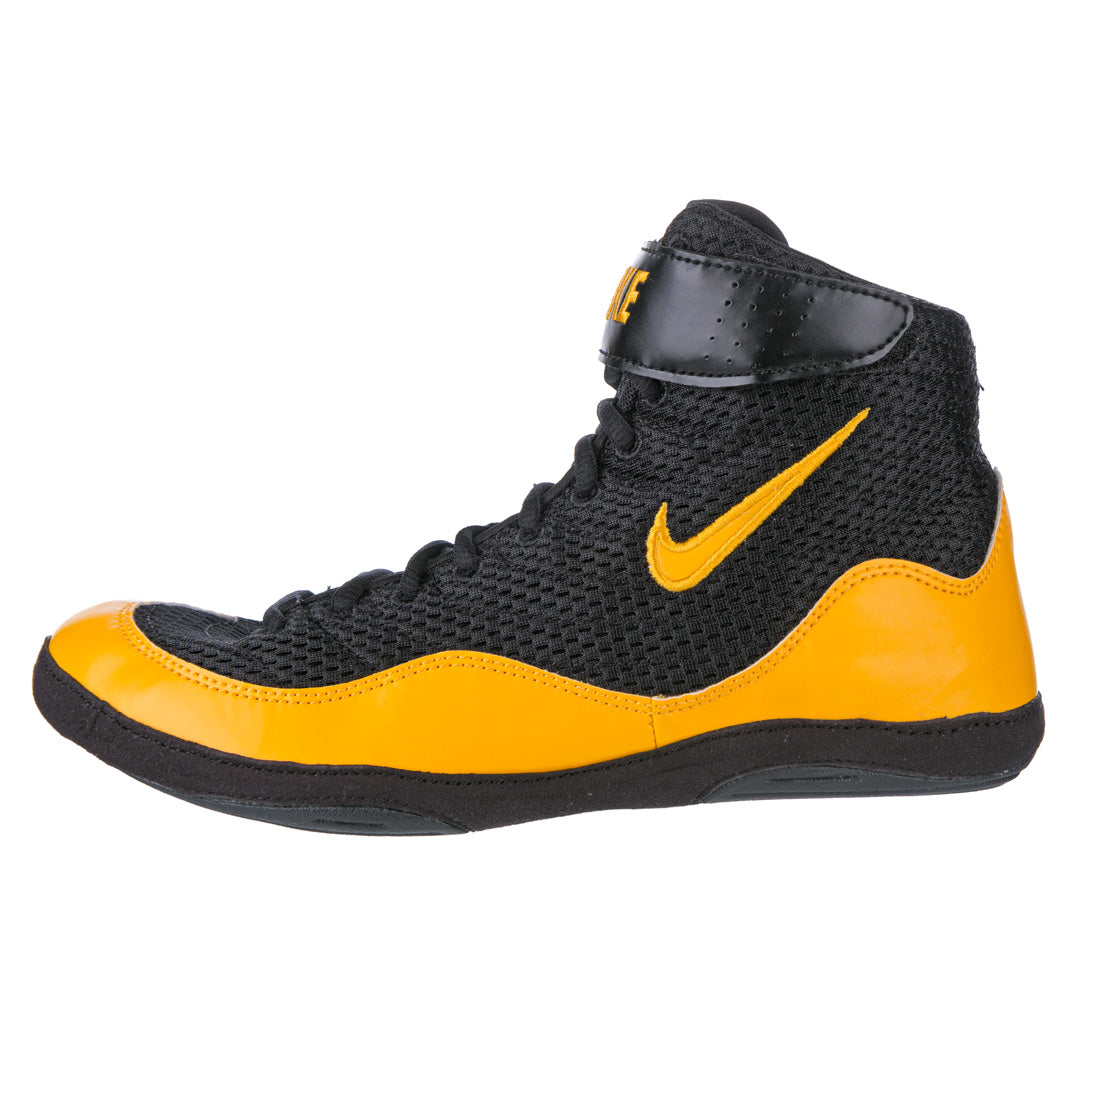 Nike Inflict Wrestling Chaussures - noir/orange, 325256077